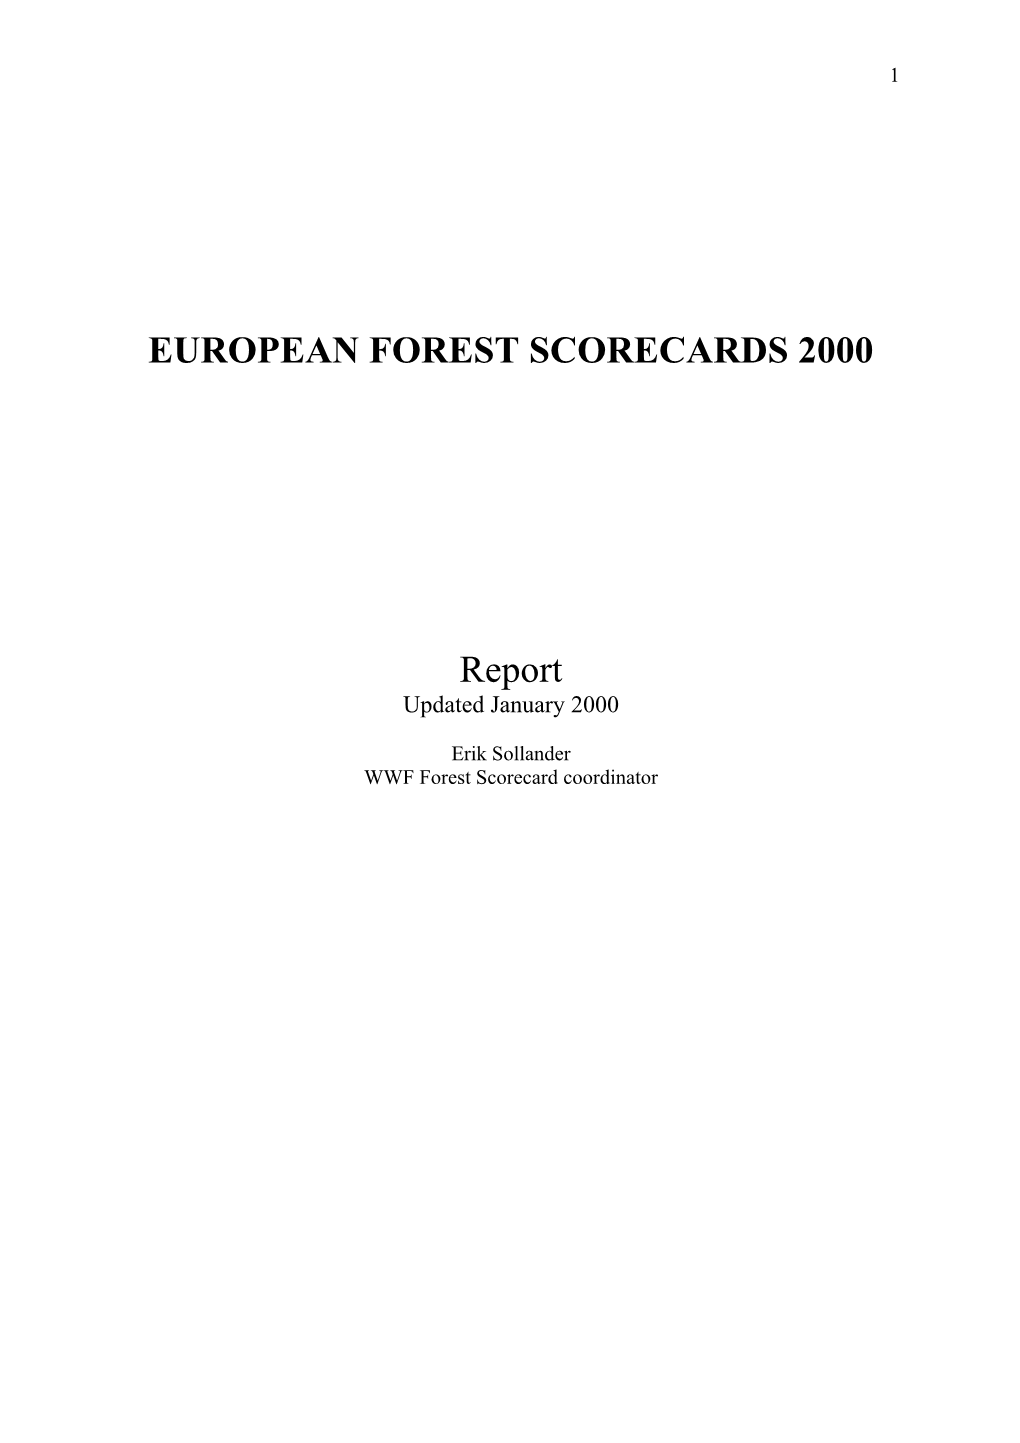 European Forest Scorecards 1998